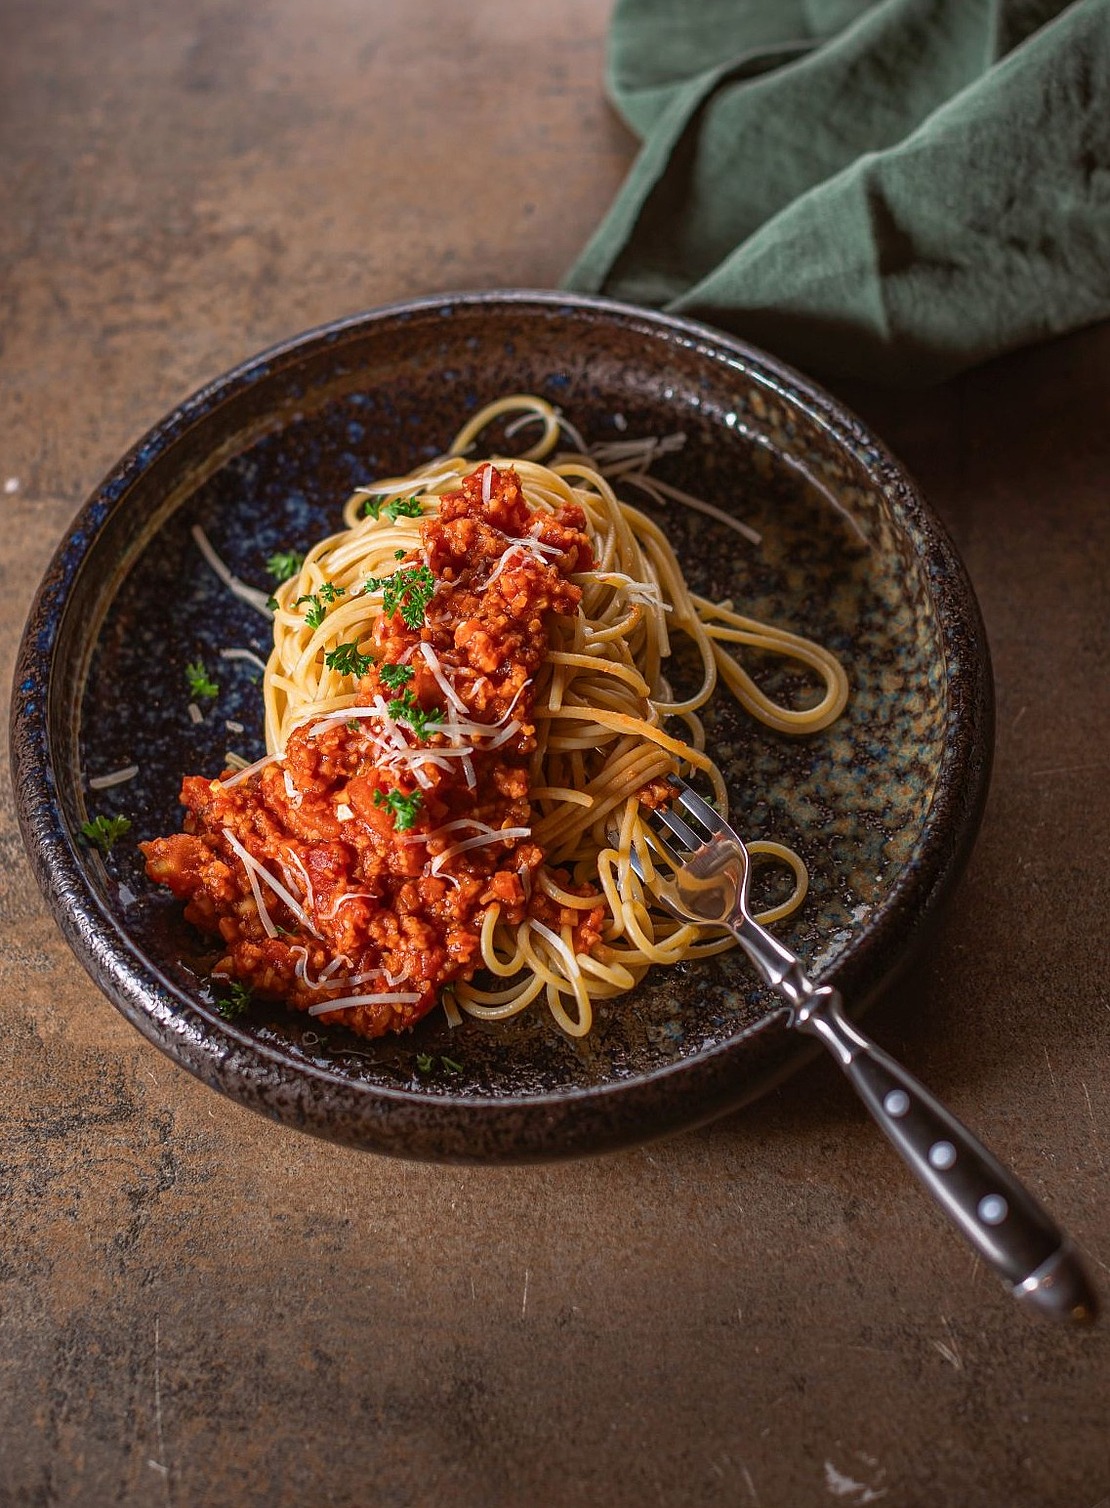 Spaghetti mit Grünkern-Bolognese